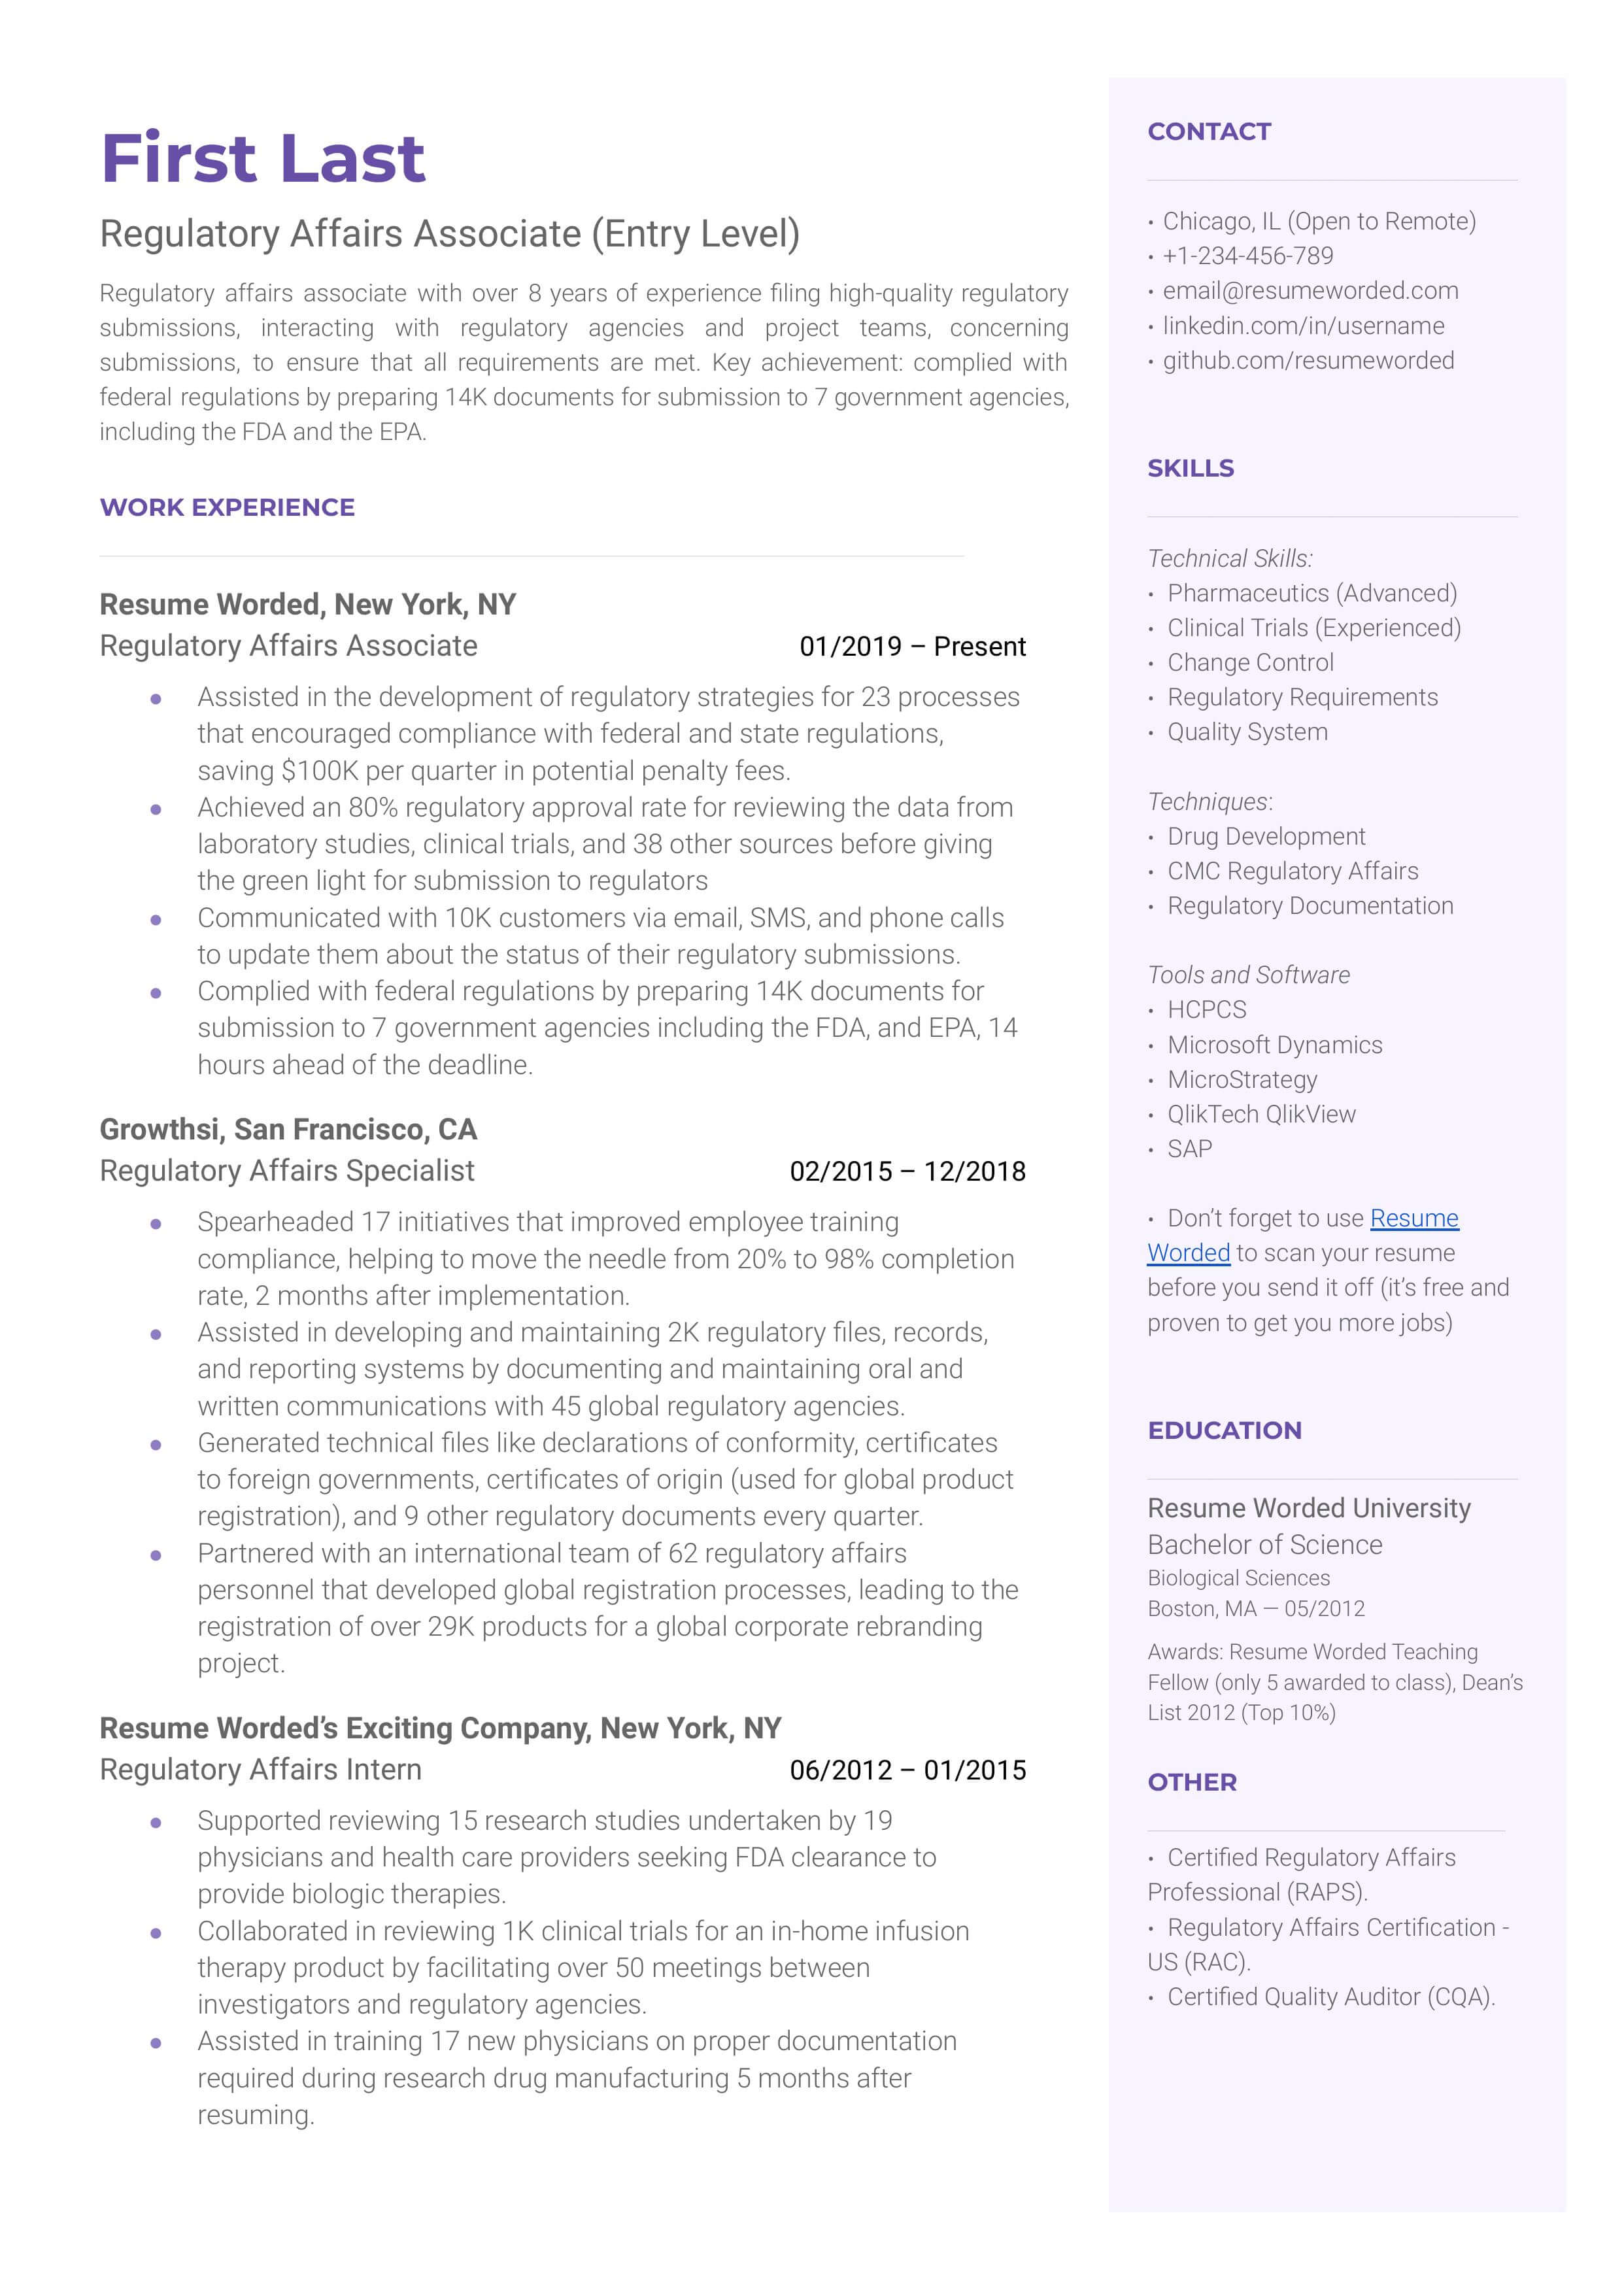 Regulatory Affairs Associate entry-level CV screenshot